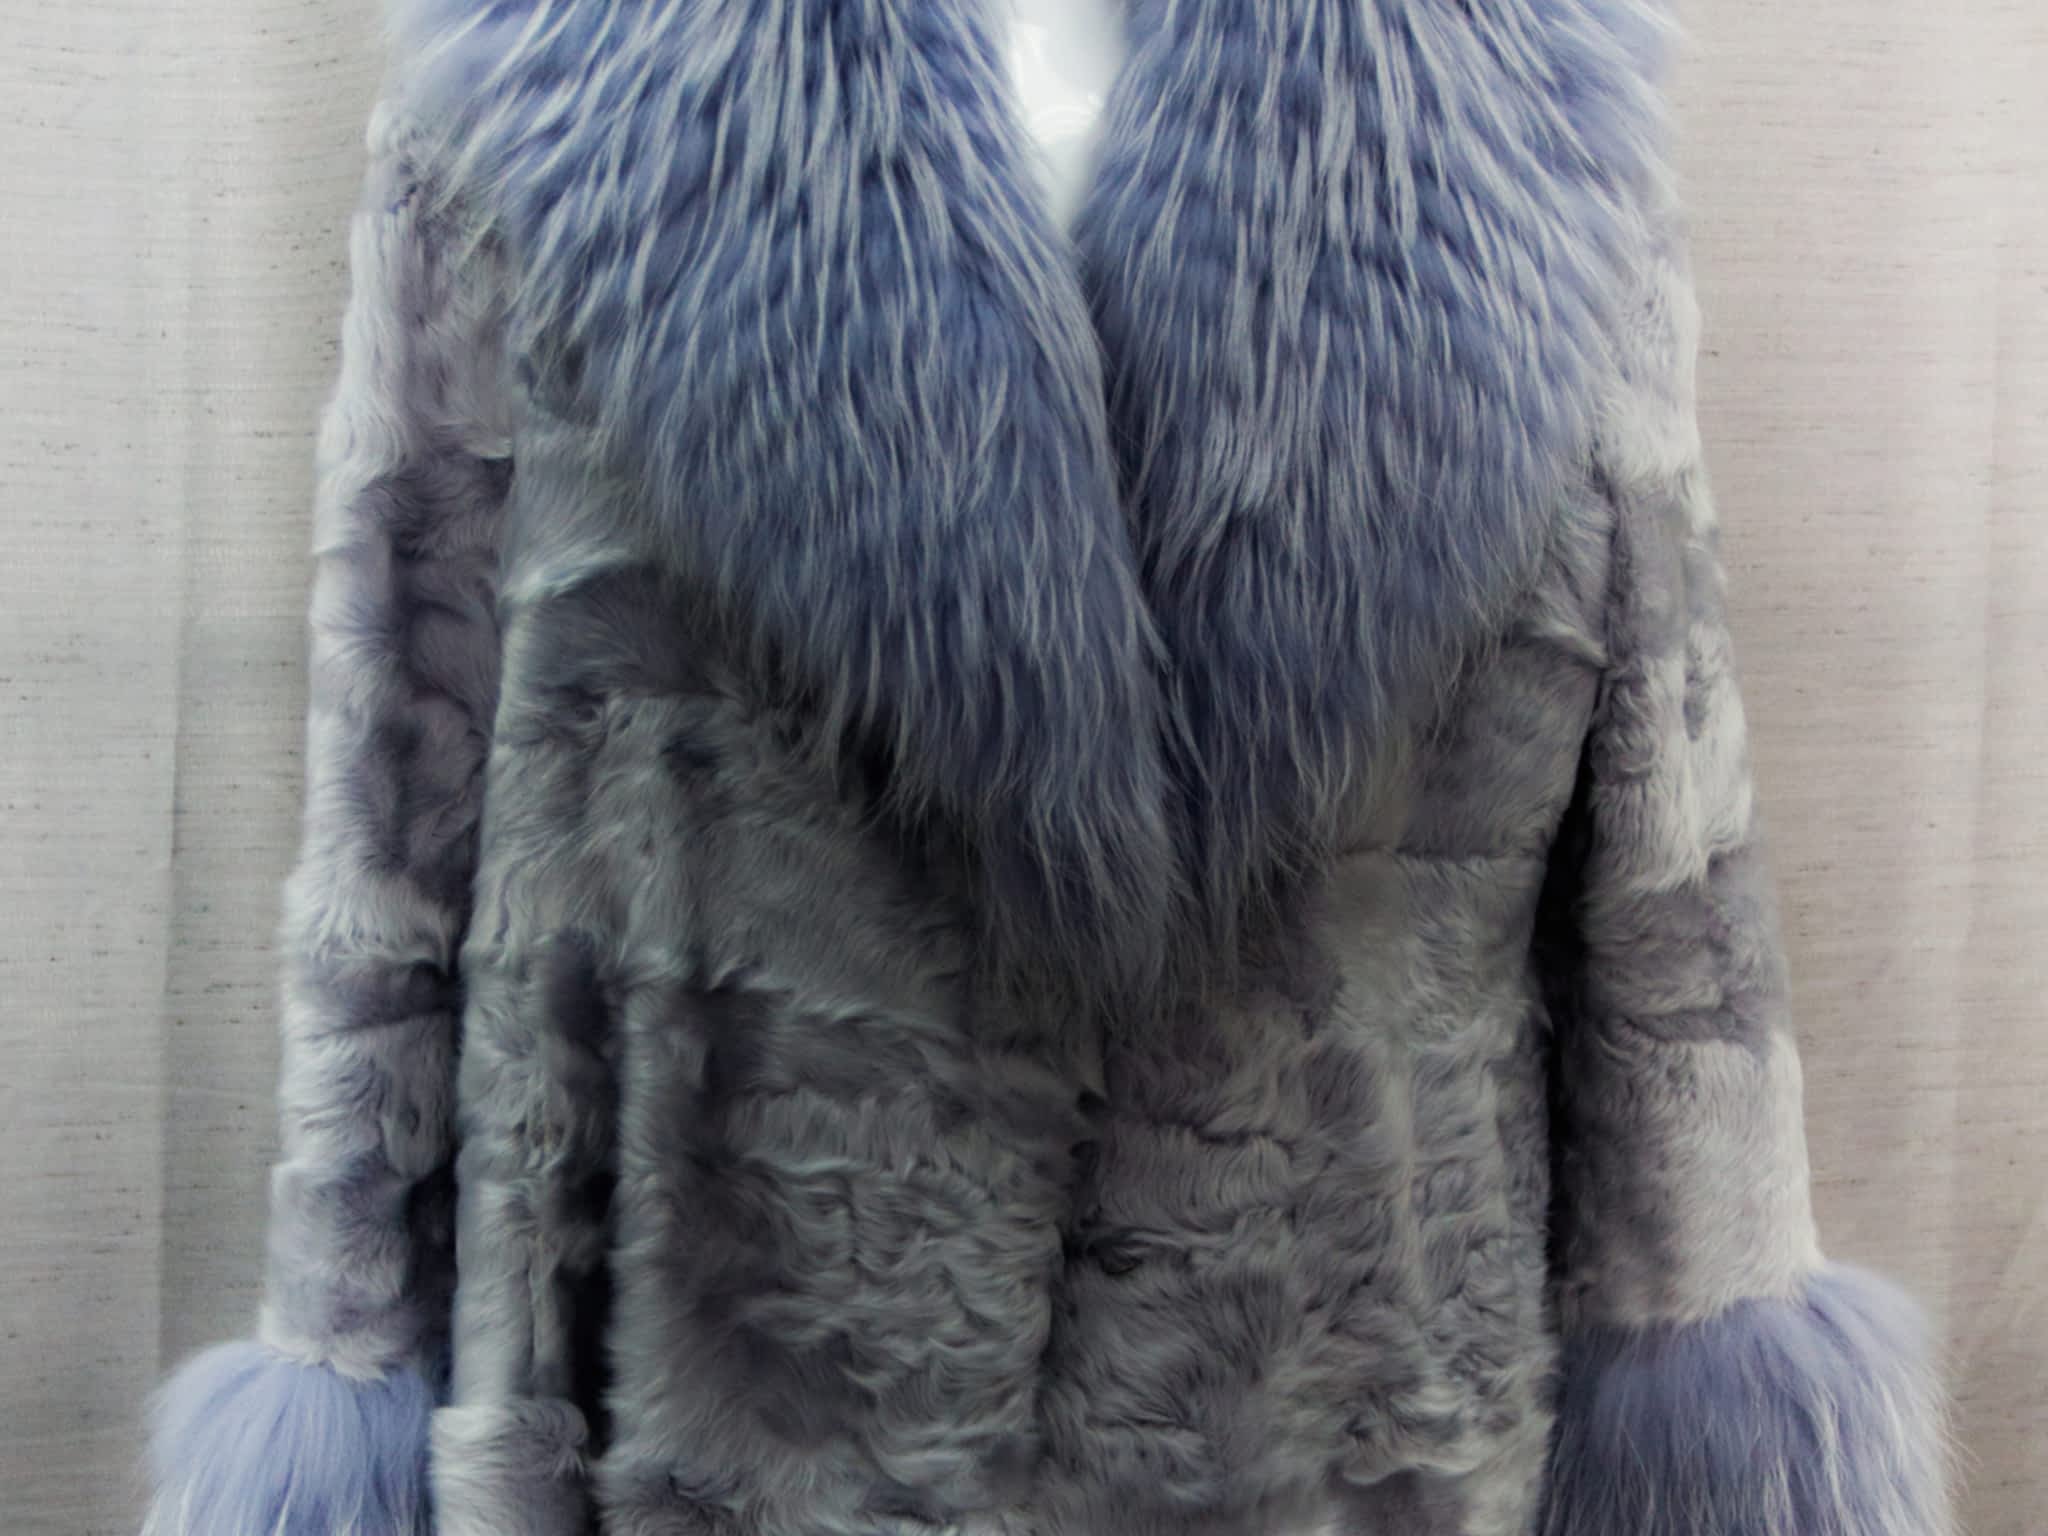 photo Herman-Sellers-Gough Furs